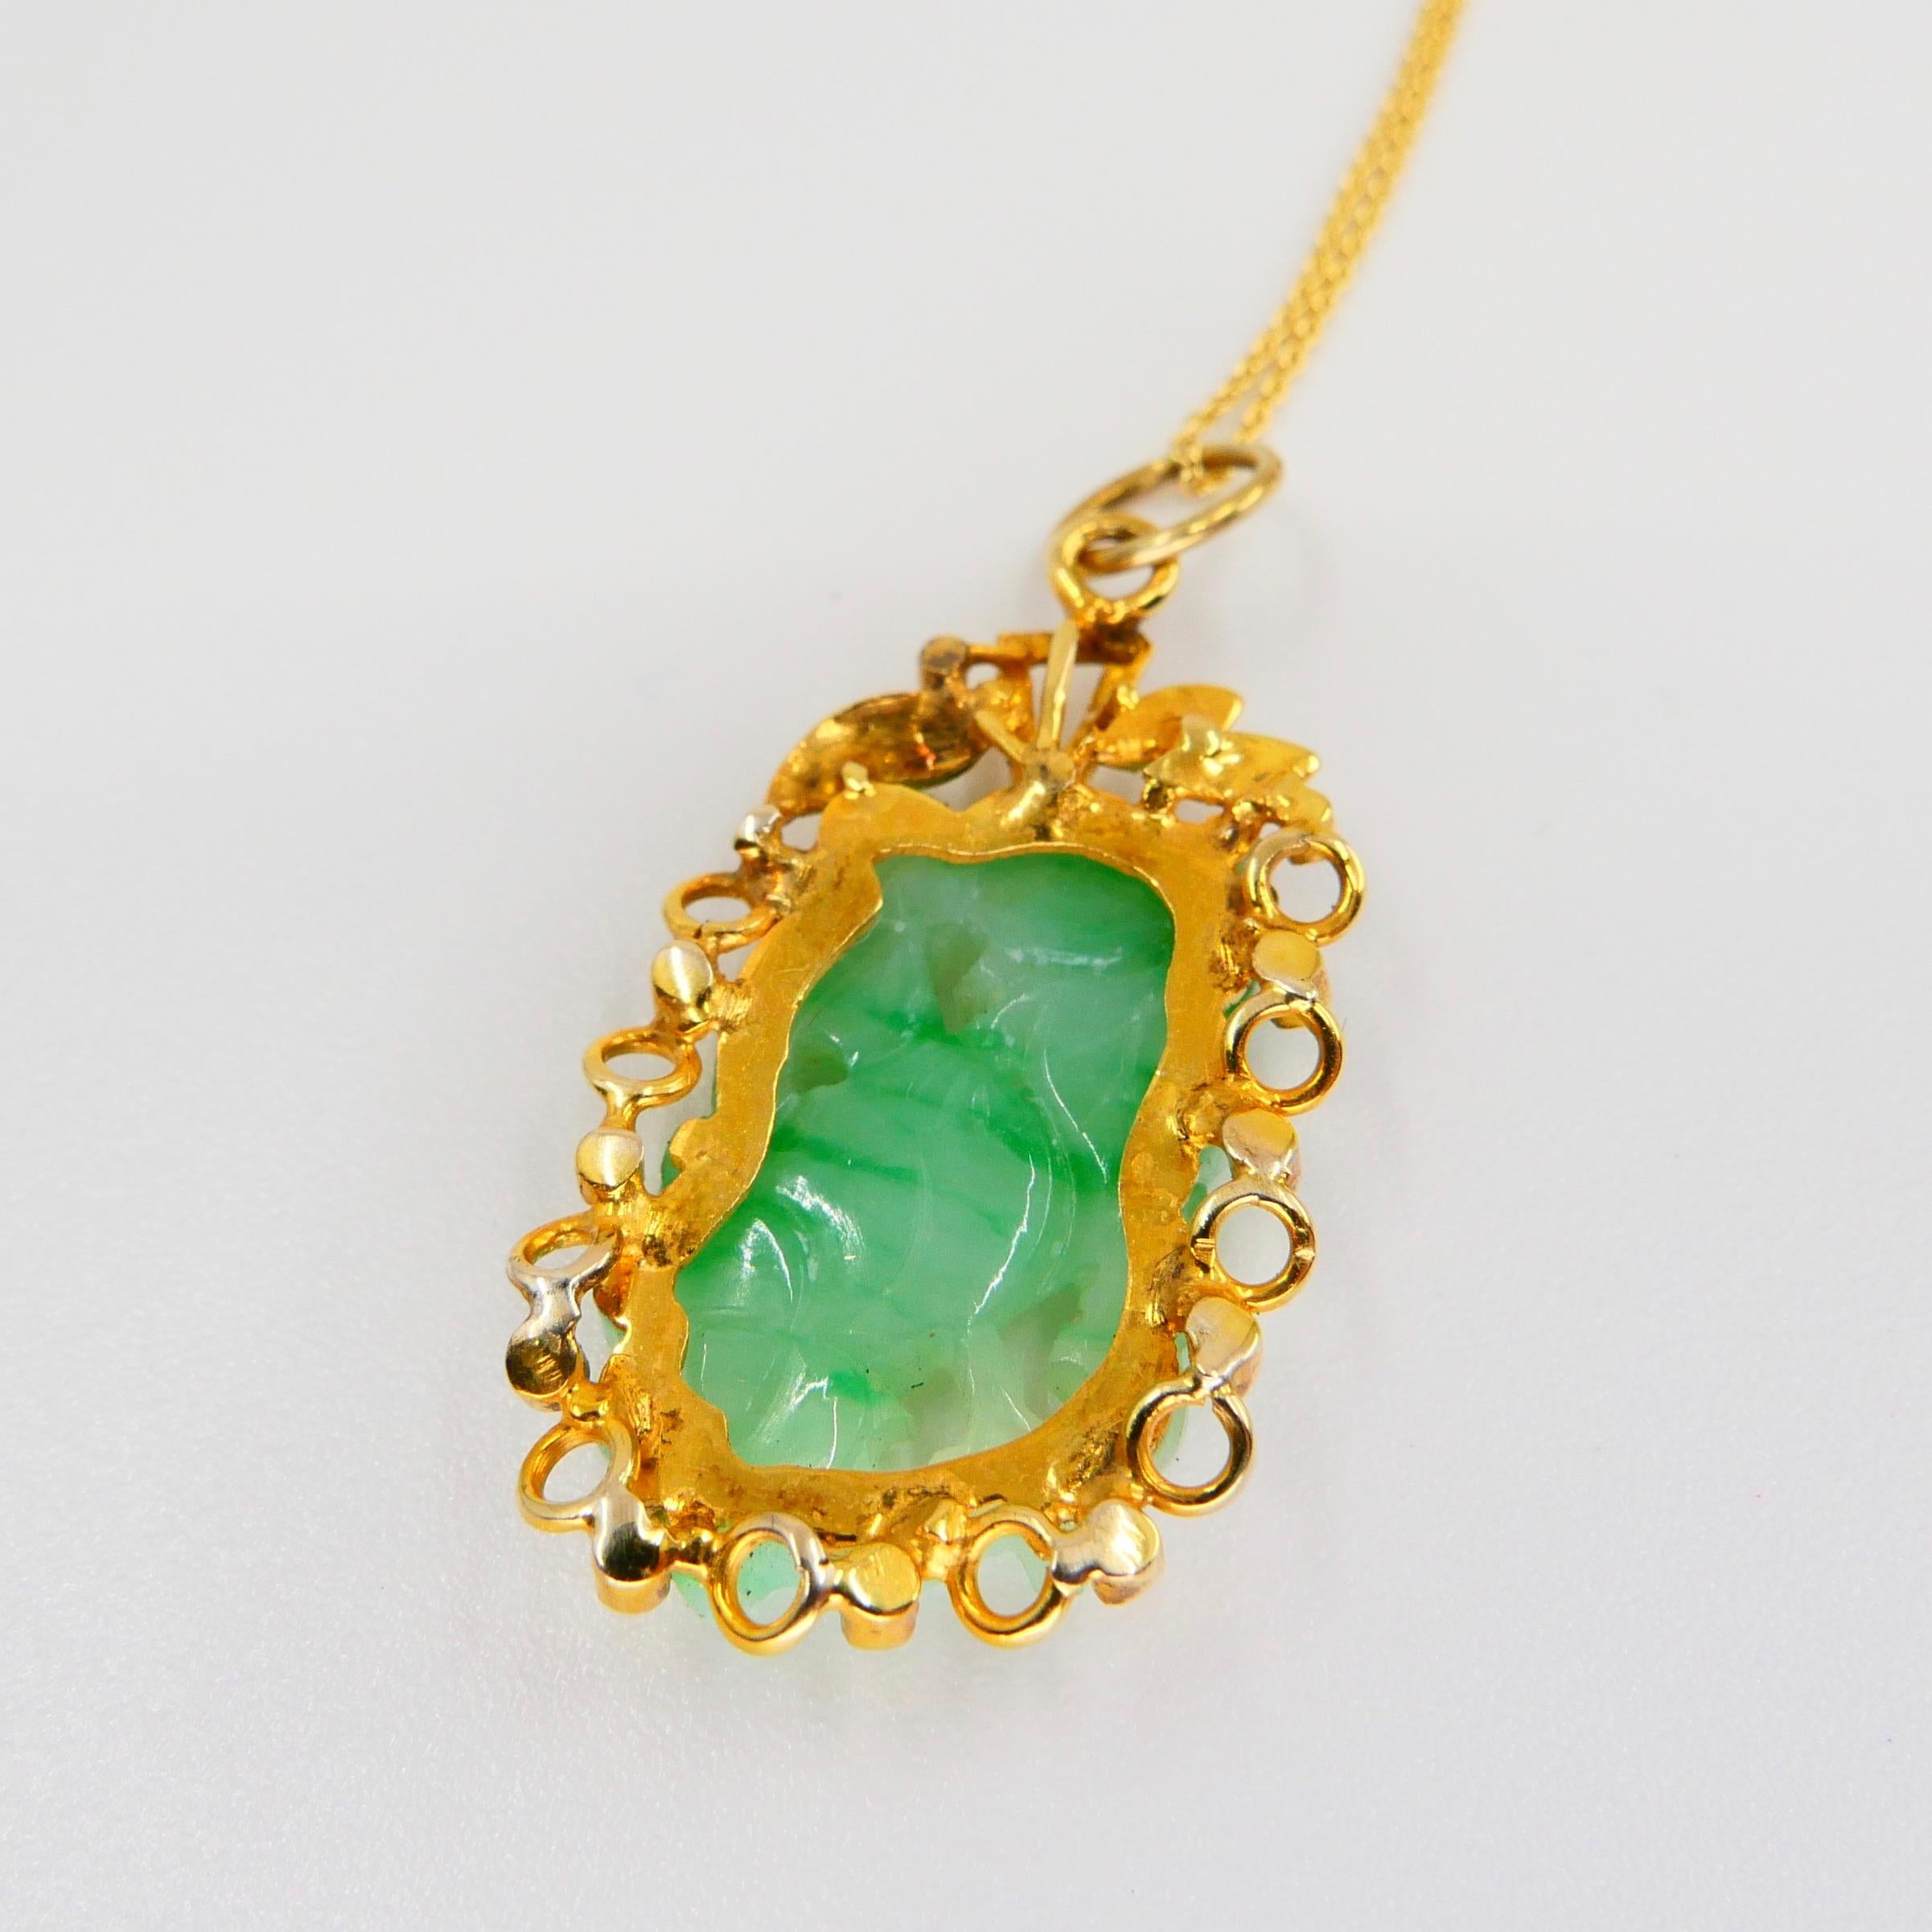 Women's Certified Type A Jadeite Jade Pendant Drop Necklace, Apple Green Veins, N.O.S For Sale